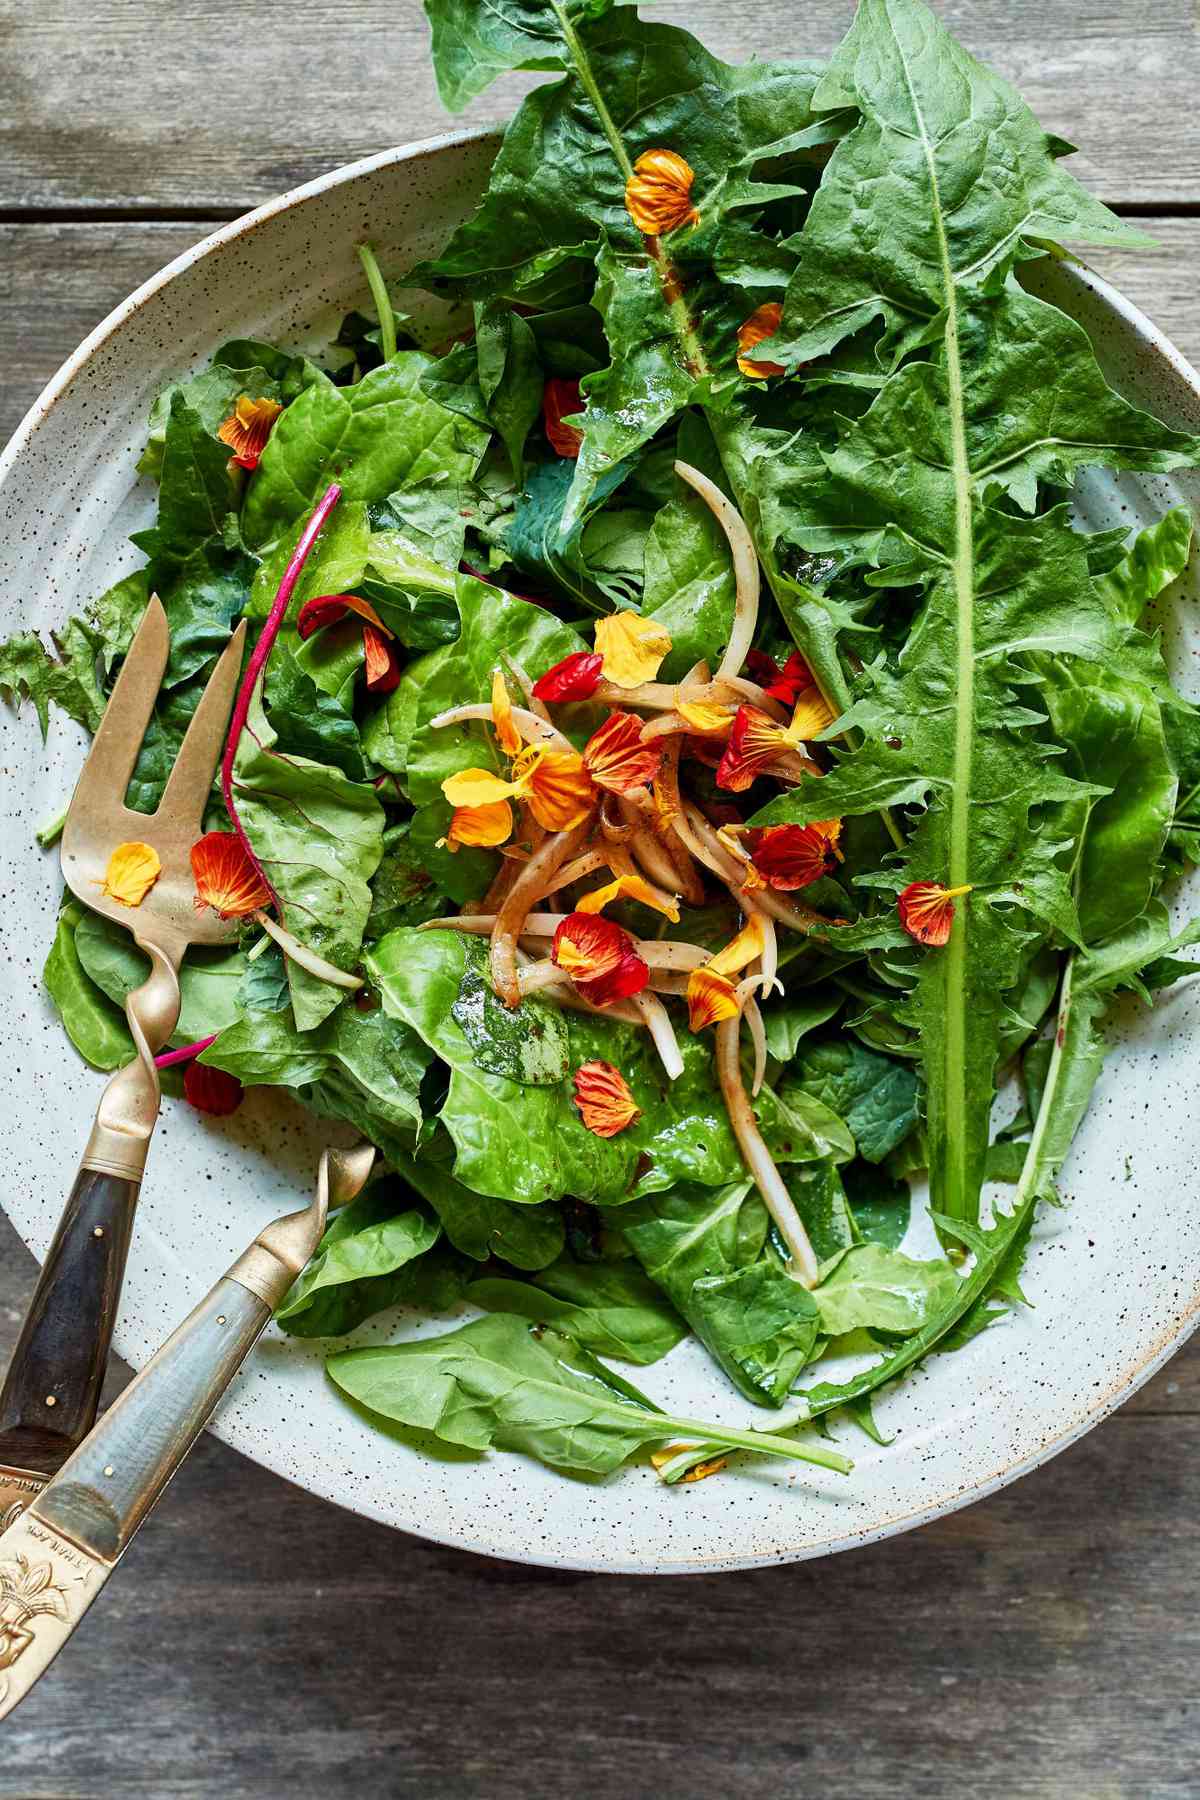 Quick Salad by Lauren Liess: Rainbow Chard, Bibb Lettuce, Kale, Nasturtium Petals, and Dandelion leaves